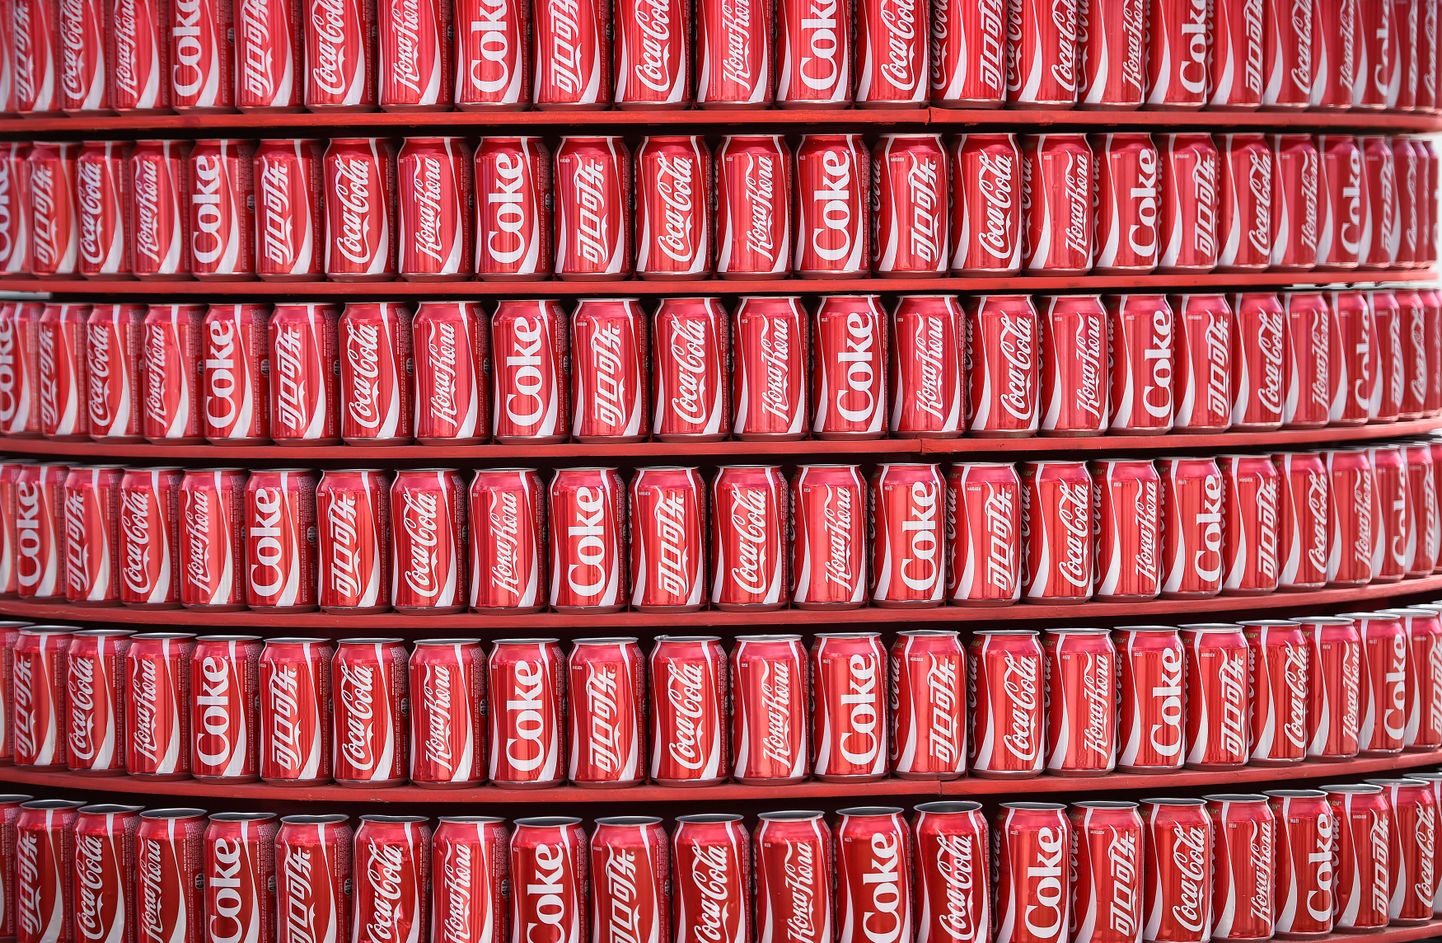 Coca-Cola bundžiņu stends.